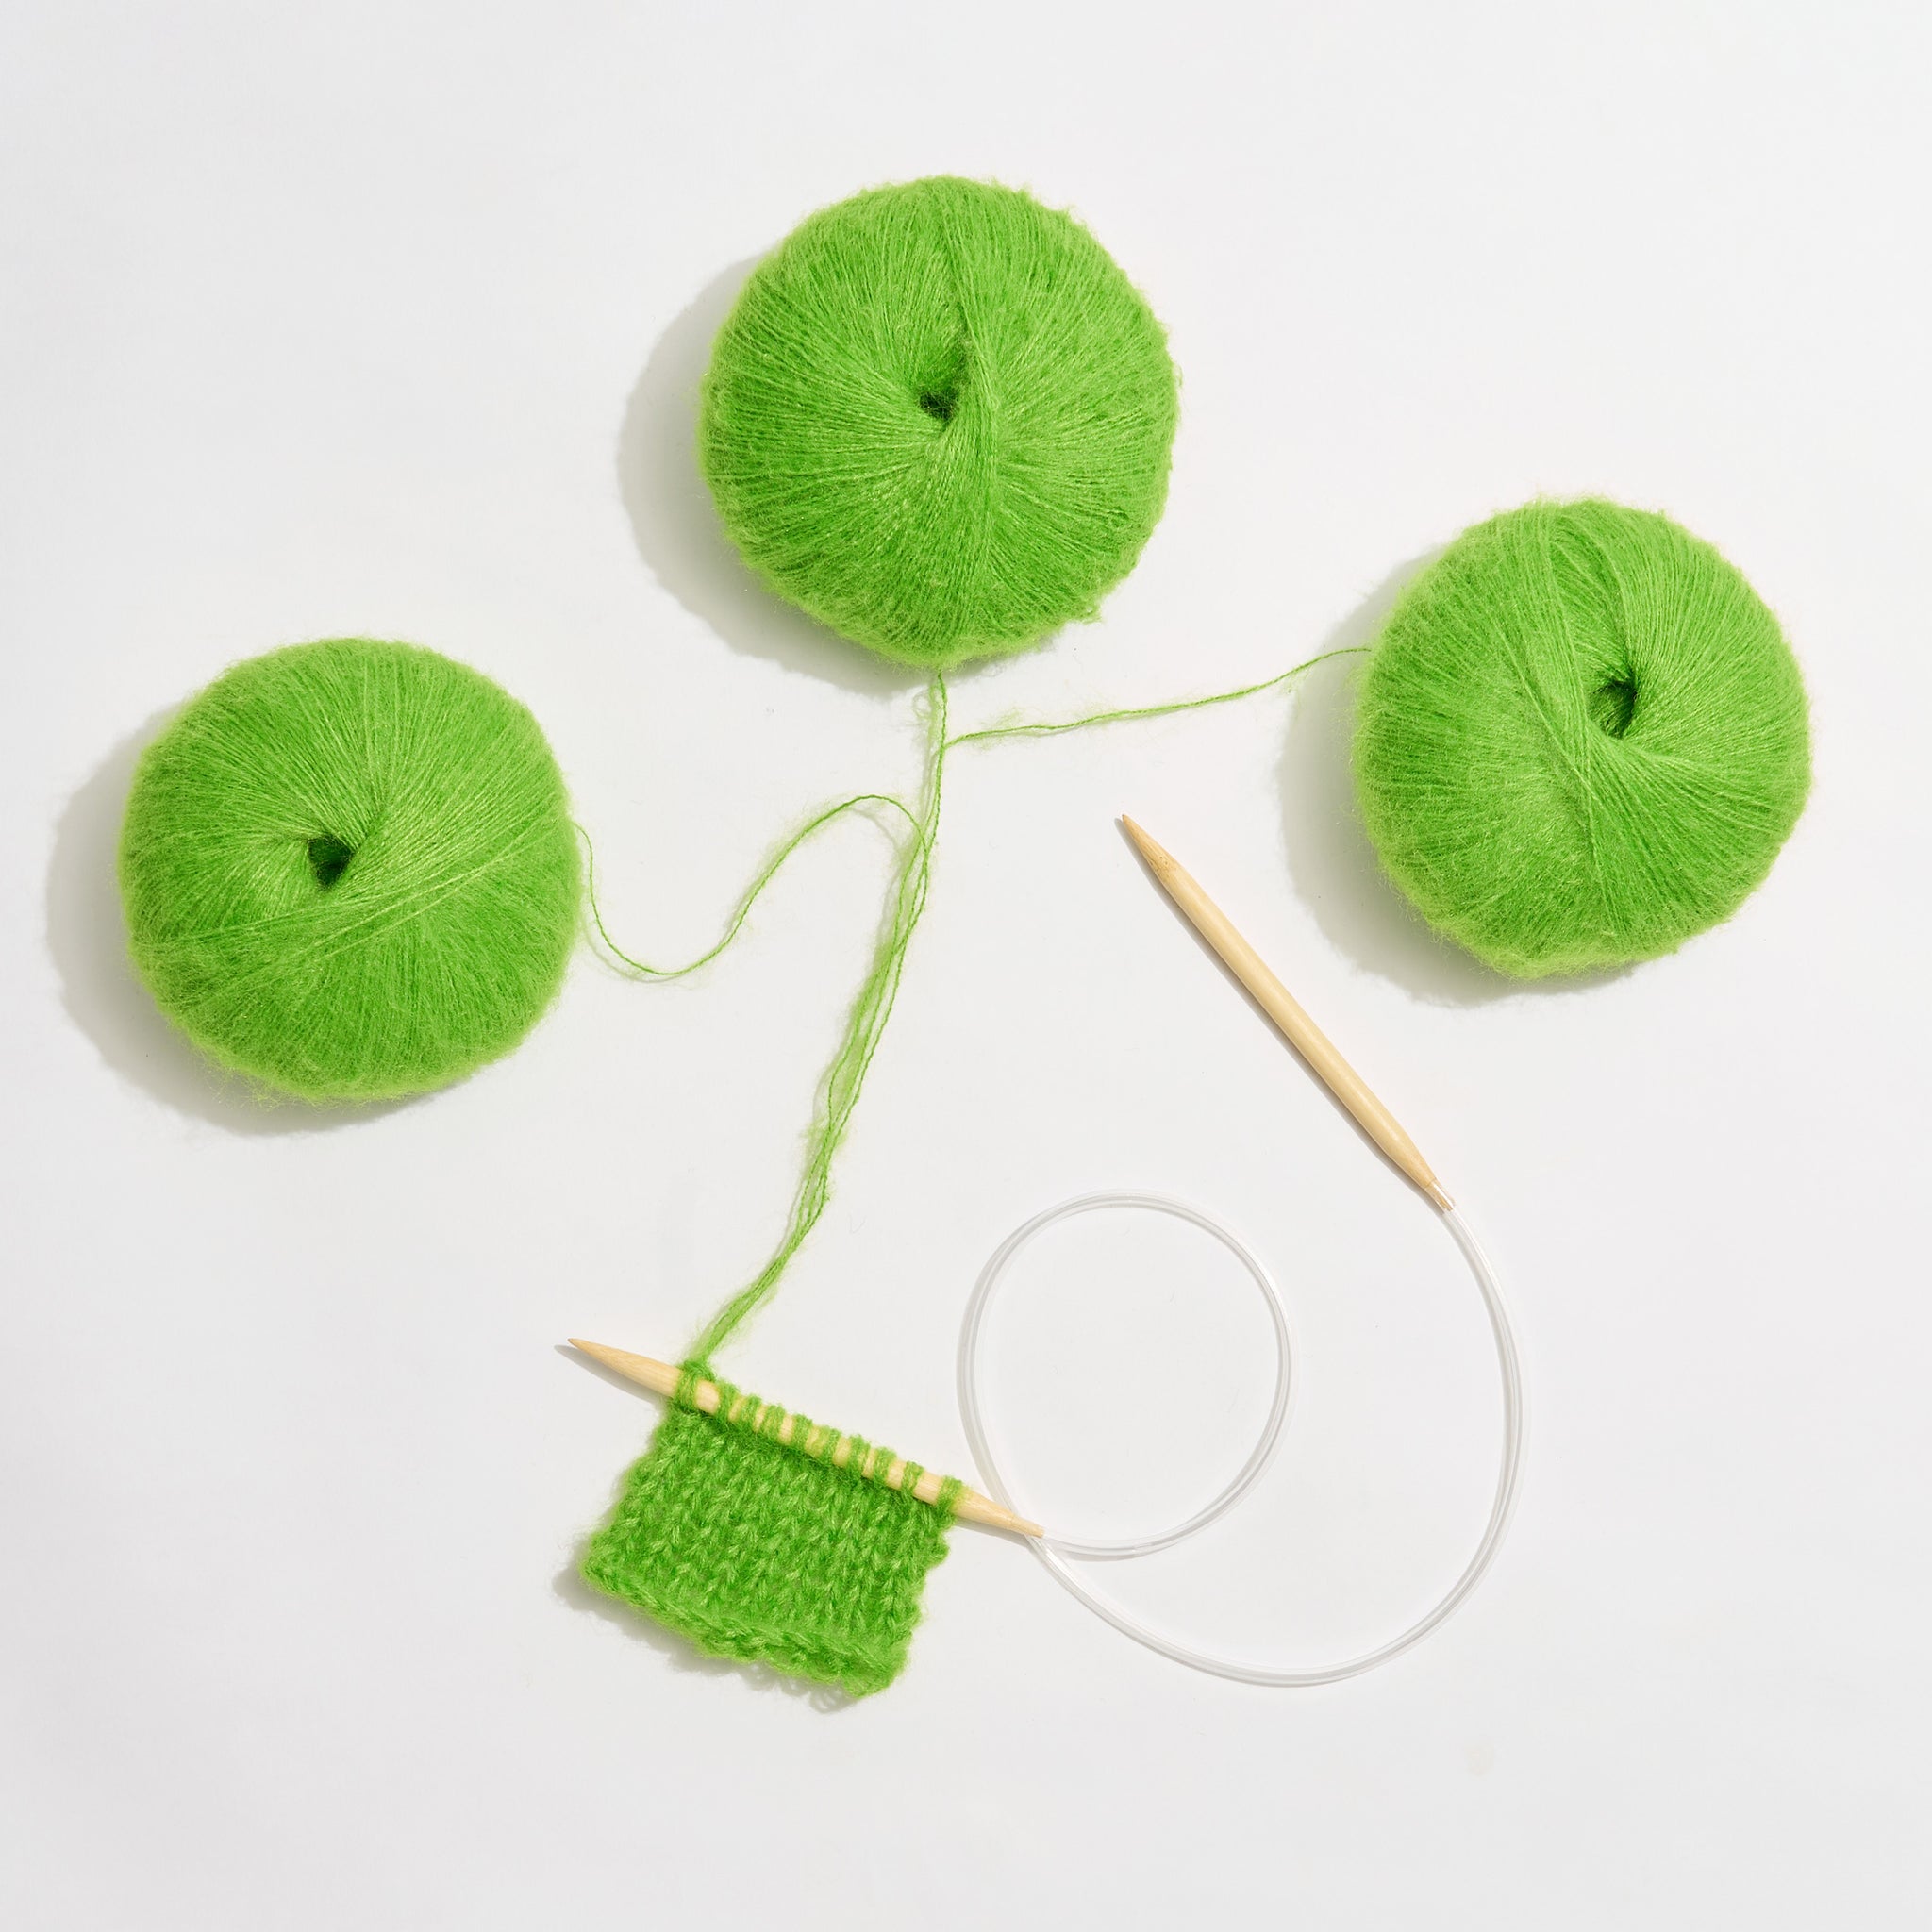 Size 8mm Circular knitting Needles